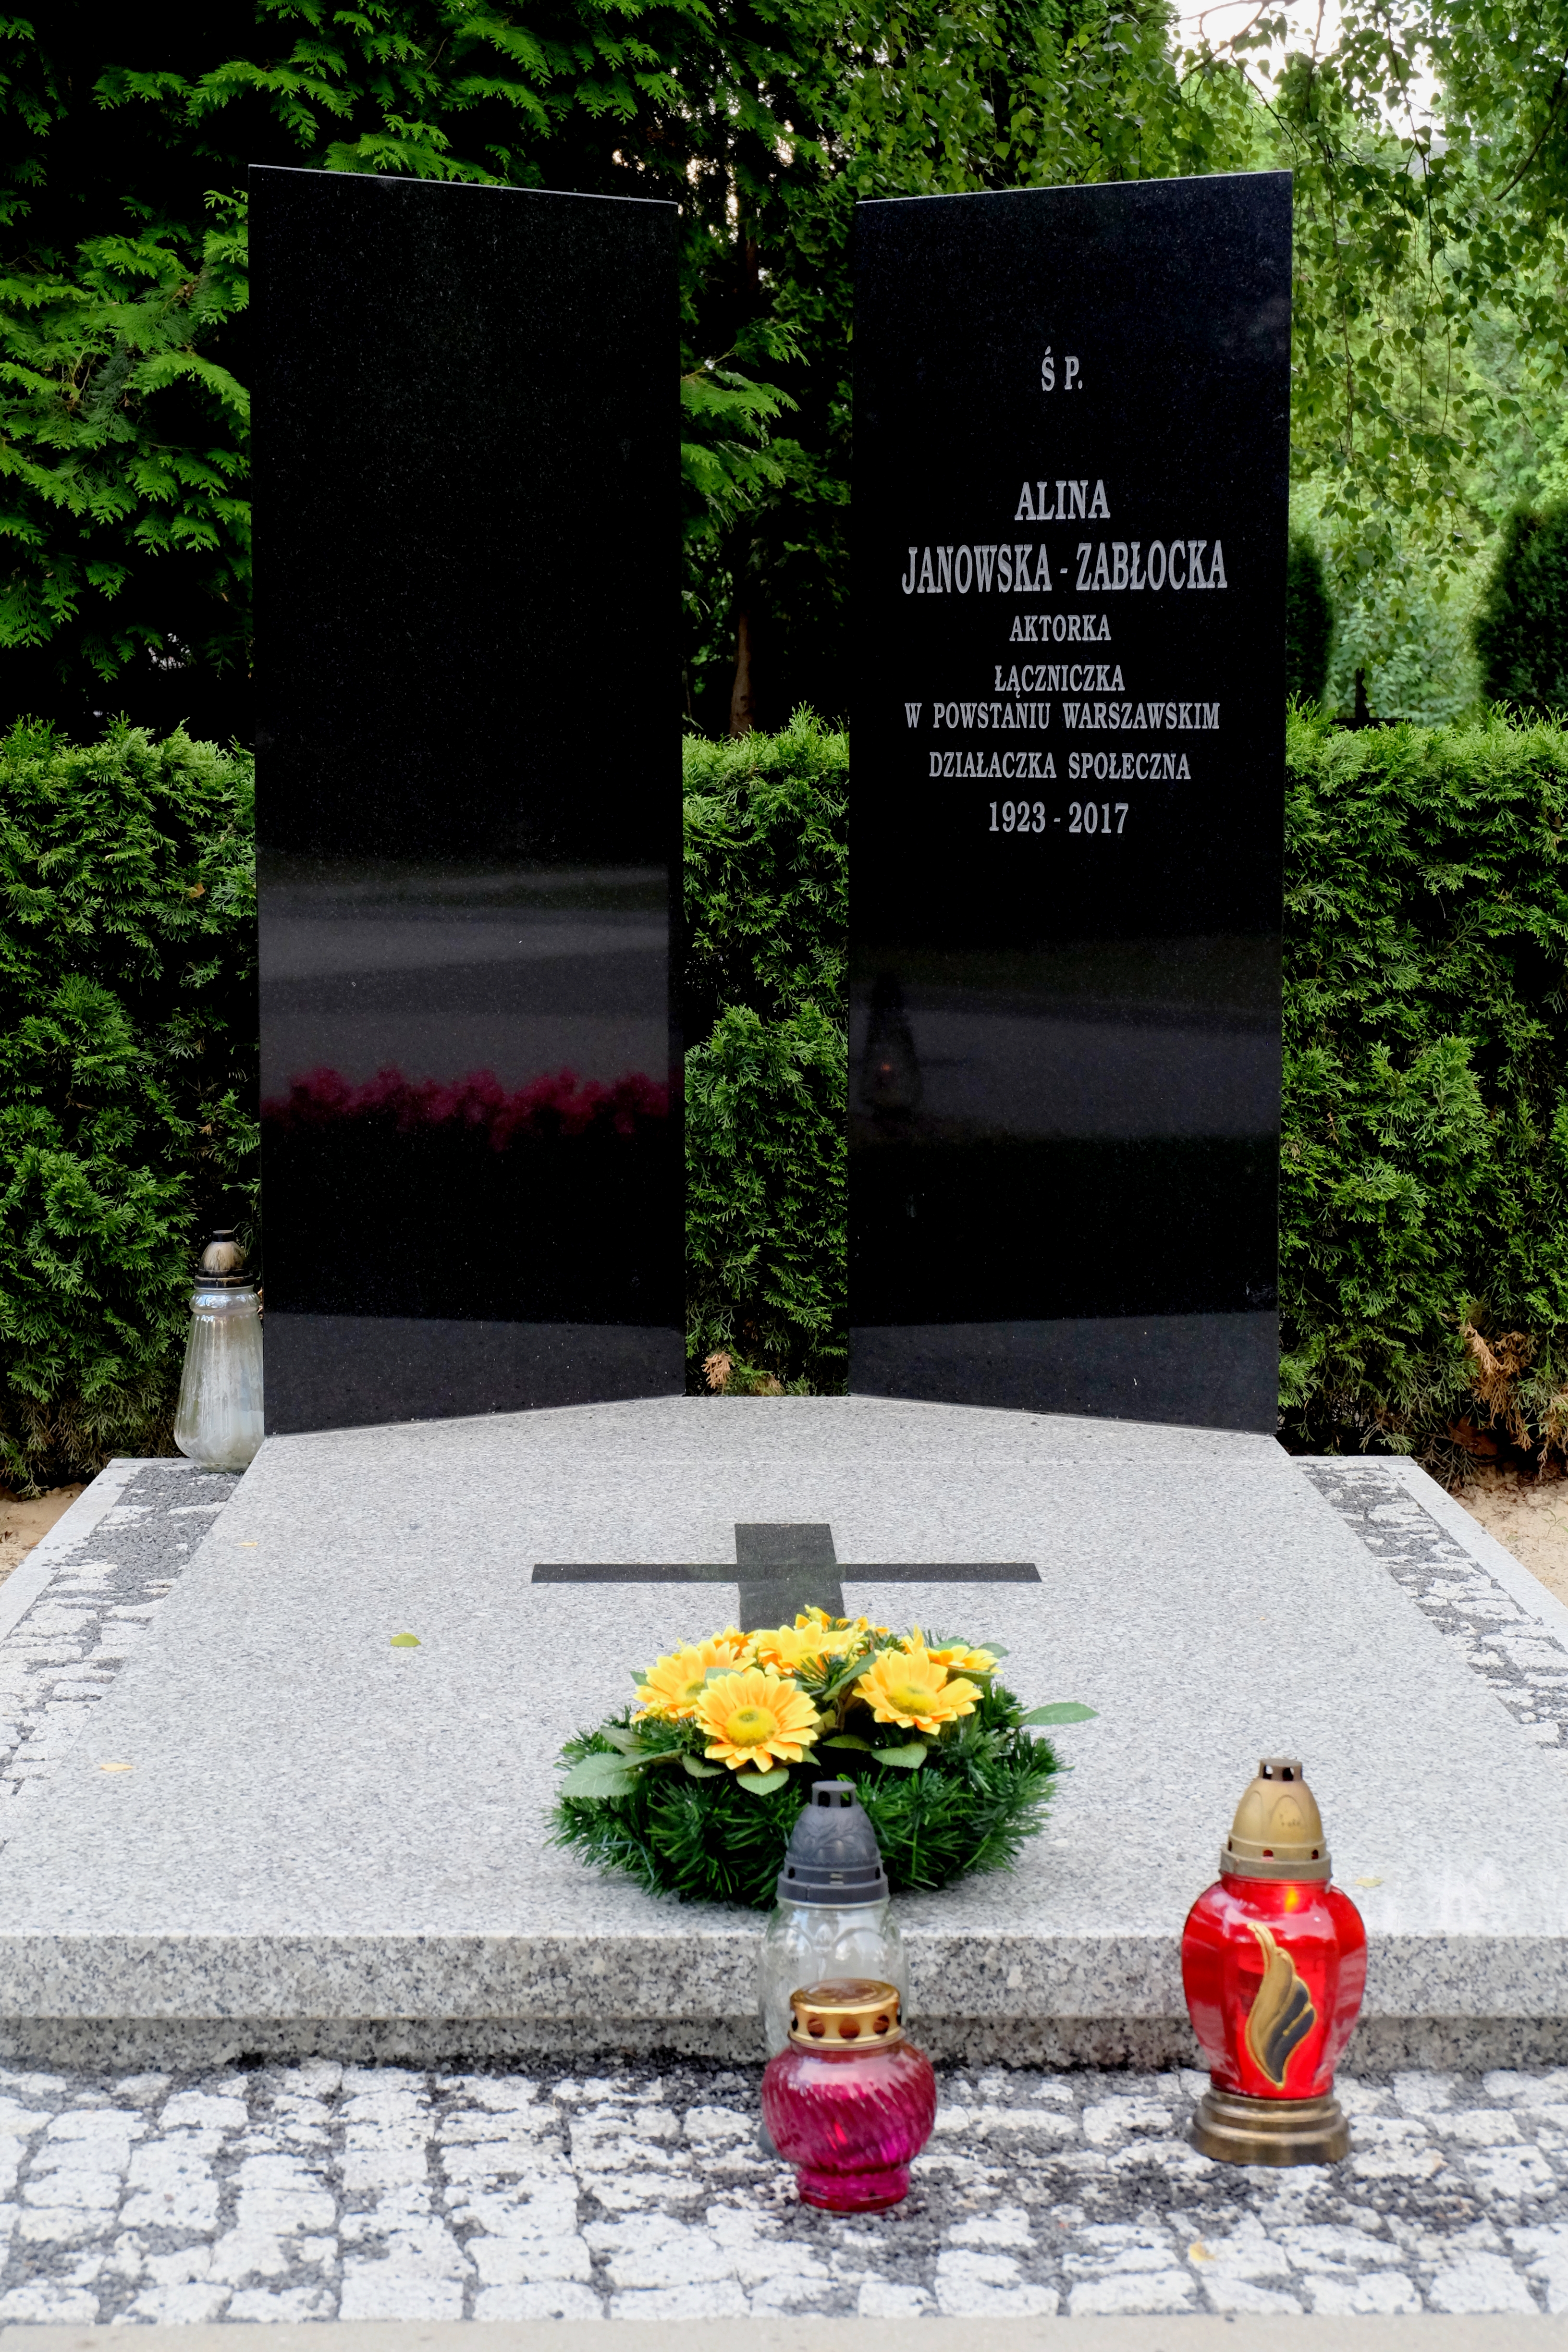 Wikipedia, Alina Janowska, Self-published work, Warsaw Military Cemetery - J